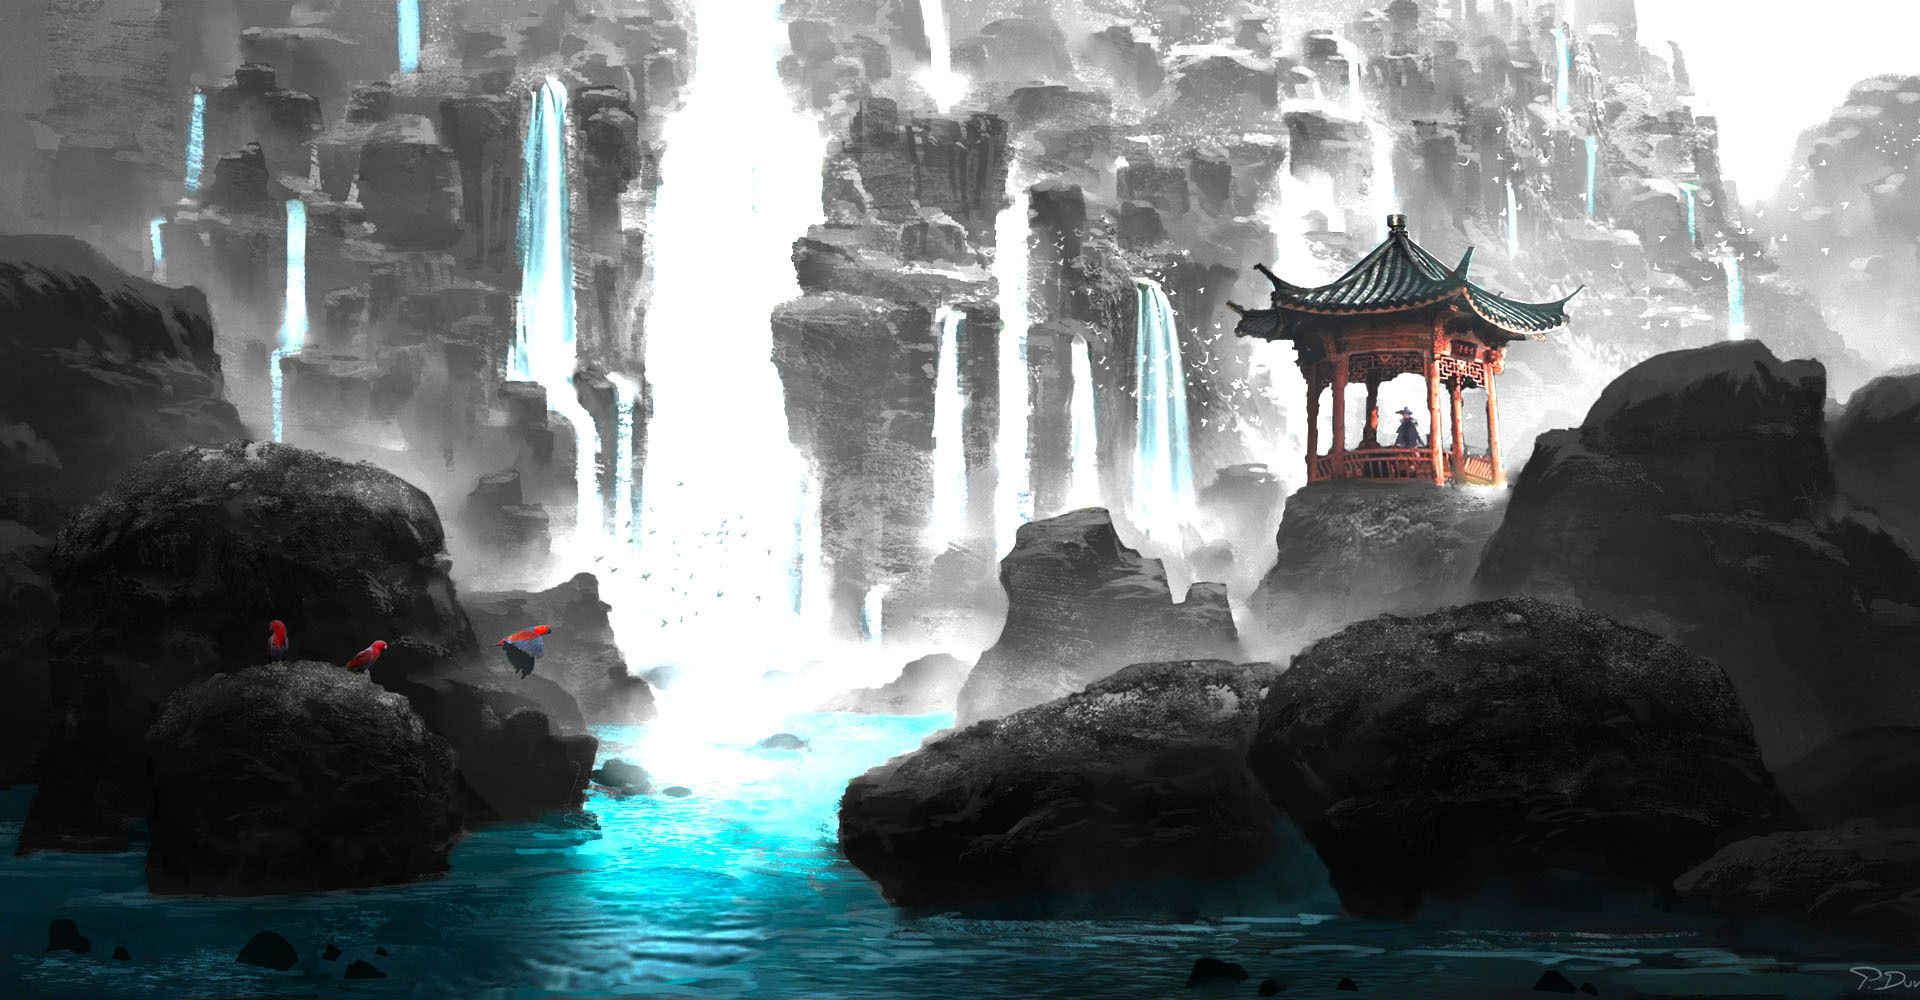 Desktop wallpaper rocks waterfall nature anime original hd image picture background dce